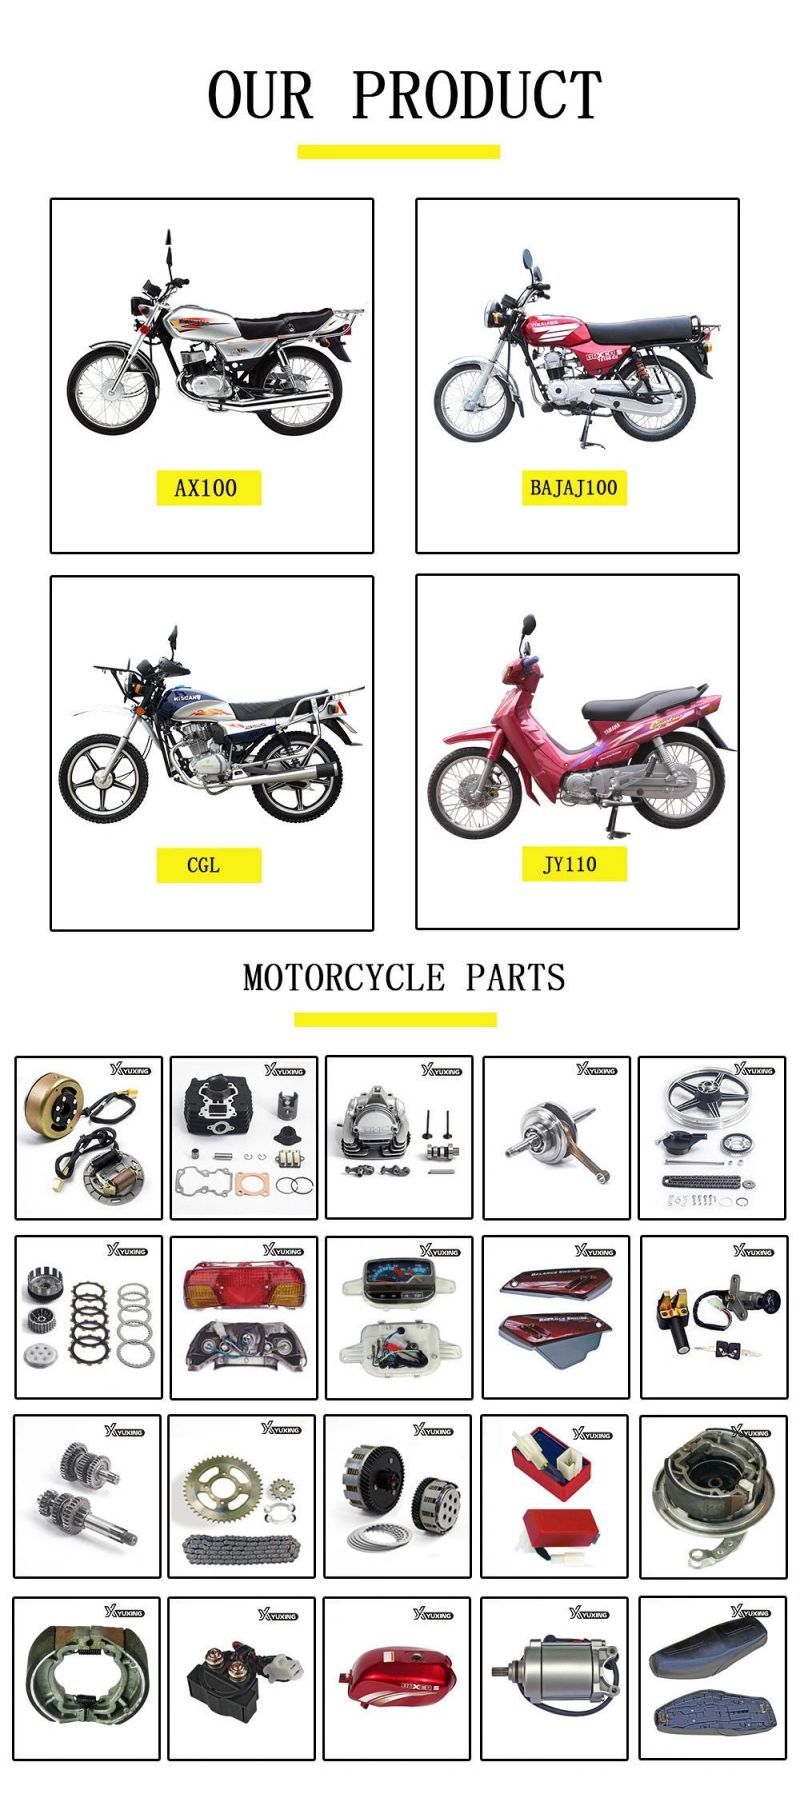 Bajaj100 Motorcycle Parts Motorcycle Accessories Motorcycle Colloidal Foot Pegs